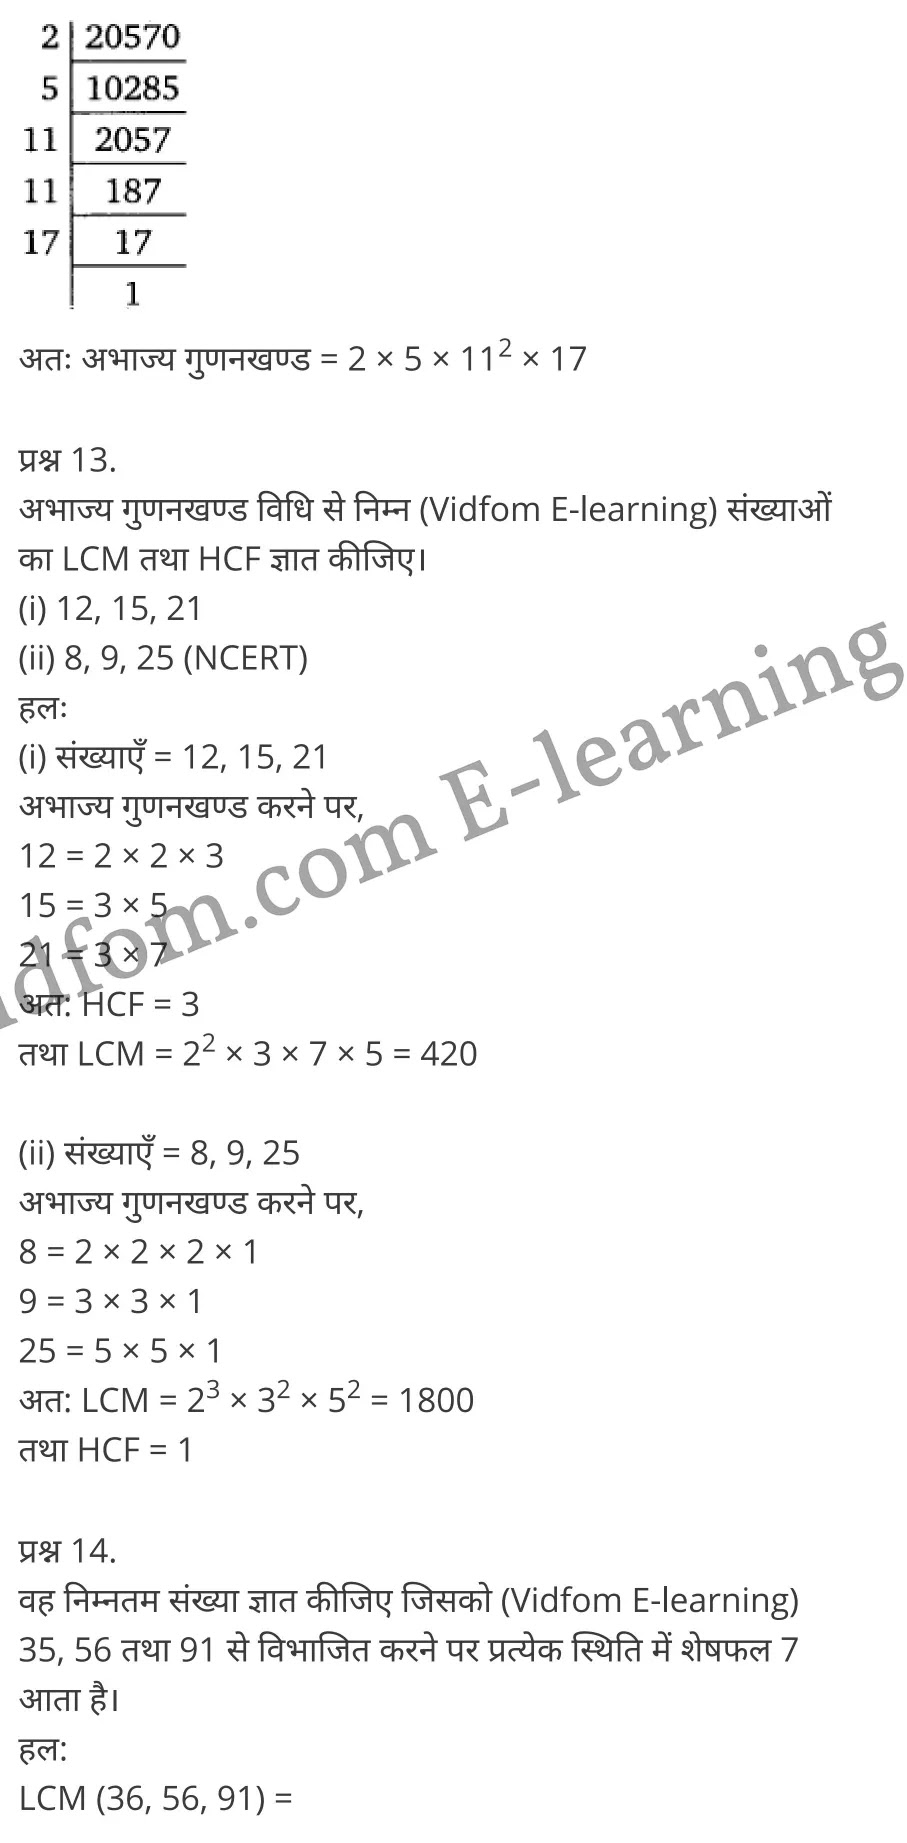 Chapter 1 Real Numbers Ex 1.1 Chapter 1 Real Numbers Ex 1.2 Chapter 1 Real Numbers Ex 1.3 कक्षा 10 बालाजी गणित  के नोट्स  हिंदी में एनसीईआरटी समाधान,     class 10 Balaji Maths Chapter 1,   class 10 Balaji Maths Chapter 1 ncert solutions in Hindi,   class 10 Balaji Maths Chapter 1 notes in hindi,   class 10 Balaji Maths Chapter 1 question answer,   class 10 Balaji Maths Chapter 1 notes,   class 10 Balaji Maths Chapter 1 class 10 Balaji Maths Chapter 1 in  hindi,    class 10 Balaji Maths Chapter 1 important questions in  hindi,   class 10 Balaji Maths Chapter 1 notes in hindi,    class 10 Balaji Maths Chapter 1 test,   class 10 Balaji Maths Chapter 1 pdf,   class 10 Balaji Maths Chapter 1 notes pdf,   class 10 Balaji Maths Chapter 1 exercise solutions,   class 10 Balaji Maths Chapter 1 notes study rankers,   class 10 Balaji Maths Chapter 1 notes,    class 10 Balaji Maths Chapter 1  class 10  notes pdf,   class 10 Balaji Maths Chapter 1 class 10  notes  ncert,   class 10 Balaji Maths Chapter 1 class 10 pdf,   class 10 Balaji Maths Chapter 1  book,   class 10 Balaji Maths Chapter 1 quiz class 10  ,    10  th class 10 Balaji Maths Chapter 1  book up board,   up board 10  th class 10 Balaji Maths Chapter 1 notes,  class 10 Balaji Maths,   class 10 Balaji Maths ncert solutions in Hindi,   class 10 Balaji Maths notes in hindi,   class 10 Balaji Maths question answer,   class 10 Balaji Maths notes,  class 10 Balaji Maths class 10 Balaji Maths Chapter 1 in  hindi,    class 10 Balaji Maths important questions in  hindi,   class 10 Balaji Maths notes in hindi,    class 10 Balaji Maths test,  class 10 Balaji Maths class 10 Balaji Maths Chapter 1 pdf,   class 10 Balaji Maths notes pdf,   class 10 Balaji Maths exercise solutions,   class 10 Balaji Maths,  class 10 Balaji Maths notes study rankers,   class 10 Balaji Maths notes,  class 10 Balaji Maths notes,   class 10 Balaji Maths  class 10  notes pdf,   class 10 Balaji Maths class 10  notes  ncert,   class 10 Balaji Maths class 10 pdf,   class 10 Balaji Maths  book,  class 10 Balaji Maths quiz class 10  ,  10  th class 10 Balaji Maths    book up board,    up board 10  th class 10 Balaji Maths notes,      कक्षा 10 बालाजी गणित अध्याय 1 ,  कक्षा 10 बालाजी गणित, कक्षा 10 बालाजी गणित अध्याय 1  के नोट्स हिंदी में,  कक्षा 10 का हिंदी अध्याय 1 का प्रश्न उत्तर,  कक्षा 10 बालाजी गणित अध्याय 1  के नोट्स,  10 कक्षा बालाजी गणित  हिंदी में, कक्षा 10 बालाजी गणित अध्याय 1  हिंदी में,  कक्षा 10 बालाजी गणित अध्याय 1  महत्वपूर्ण प्रश्न हिंदी में, कक्षा 10   हिंदी के नोट्स  हिंदी में, बालाजी गणित हिंदी में  कक्षा 10 नोट्स pdf,    बालाजी गणित हिंदी में  कक्षा 10 नोट्स 2021 ncert,   बालाजी गणित हिंदी  कक्षा 10 pdf,   बालाजी गणित हिंदी में  पुस्तक,   बालाजी गणित हिंदी में की बुक,   बालाजी गणित हिंदी में  प्रश्नोत्तरी class 10 ,  बिहार बोर्ड 10  पुस्तक वीं हिंदी नोट्स,    बालाजी गणित कक्षा 10 नोट्स 2021 ncert,   बालाजी गणित  कक्षा 10 pdf,   बालाजी गणित  पुस्तक,   बालाजी गणित  प्रश्नोत्तरी class 10, कक्षा 10 बालाजी गणित,  कक्षा 10 बालाजी गणित  के नोट्स हिंदी में,  कक्षा 10 का हिंदी का प्रश्न उत्तर,  कक्षा 10 बालाजी गणित  के नोट्स,  10 कक्षा हिंदी 2021  हिंदी में, कक्षा 10 बालाजी गणित  हिंदी में,  कक्षा 10 बालाजी गणित  महत्वपूर्ण प्रश्न हिंदी में, कक्षा 10 बालाजी गणित  नोट्स  हिंदी में,